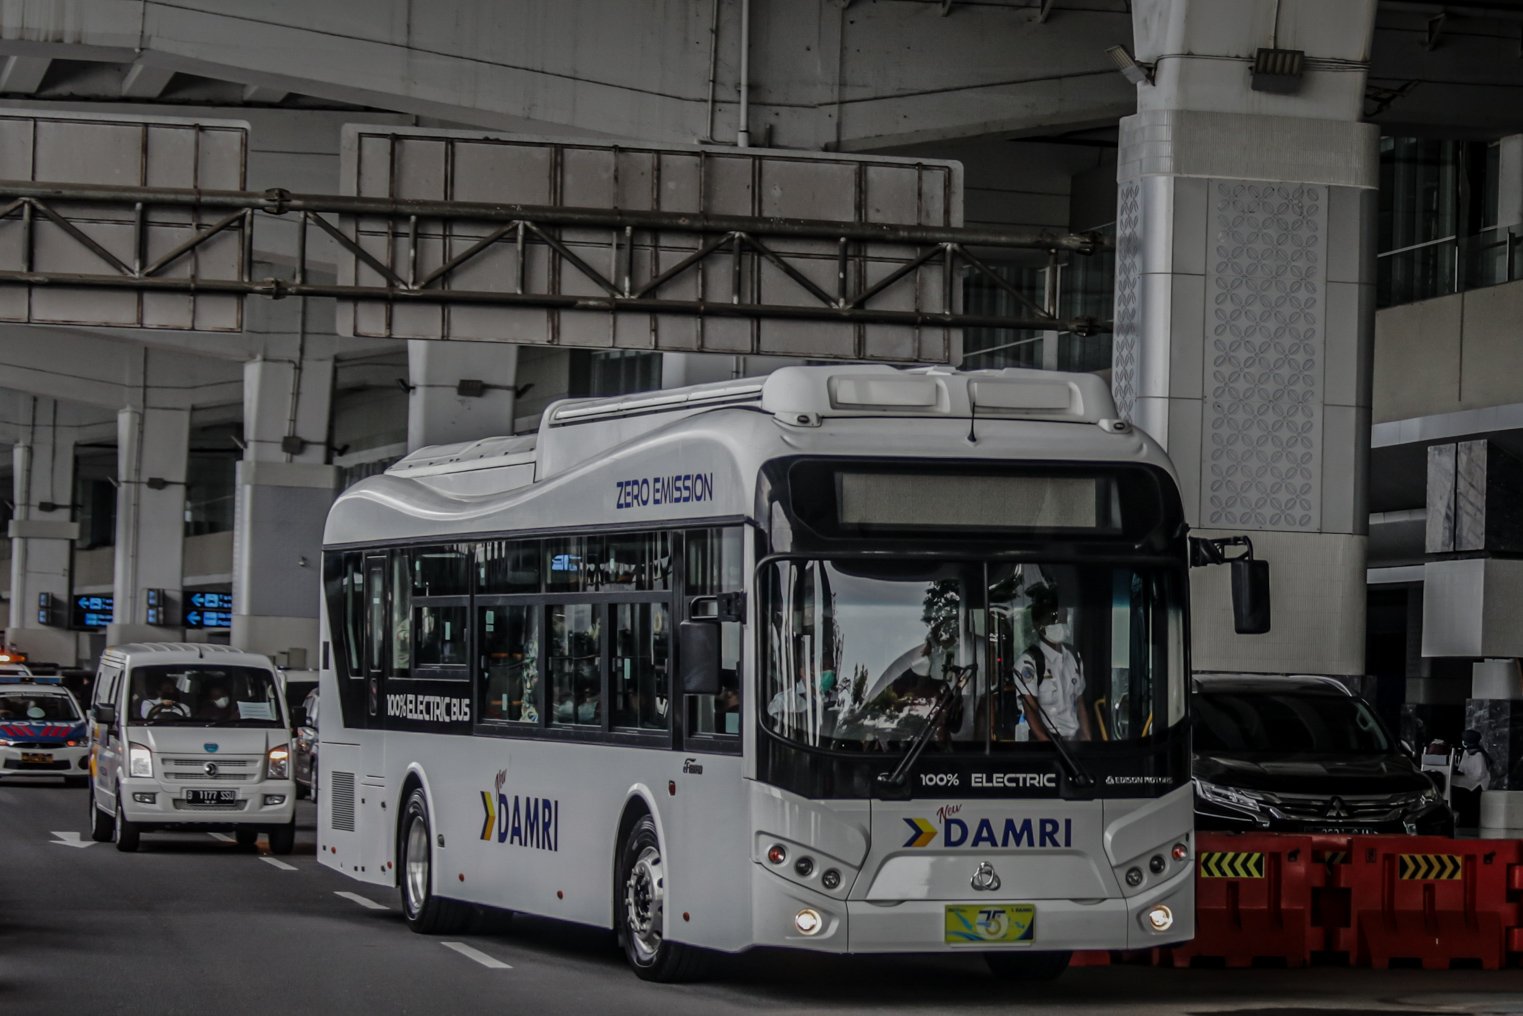 Sebuah bus listik Damri melintas usai diluncurkan di Bandara Soekarno Hatta, Tangerang, Banten, Kamis (25/11/2021). Perum Damri meluncurkan bus listrik untuk angkutan penumpang rute bandara sebagai bentuk komitmen dalam mendorong penggunaan bus listrik berbasis baterai hingga 20 persen dari populasi kendaraan di Indonesia pada 2025 dan penurunan emisi gas buang hingga 29 persen pada 2030. ANTARA FOTO/Fauzan/wsj.\r\n